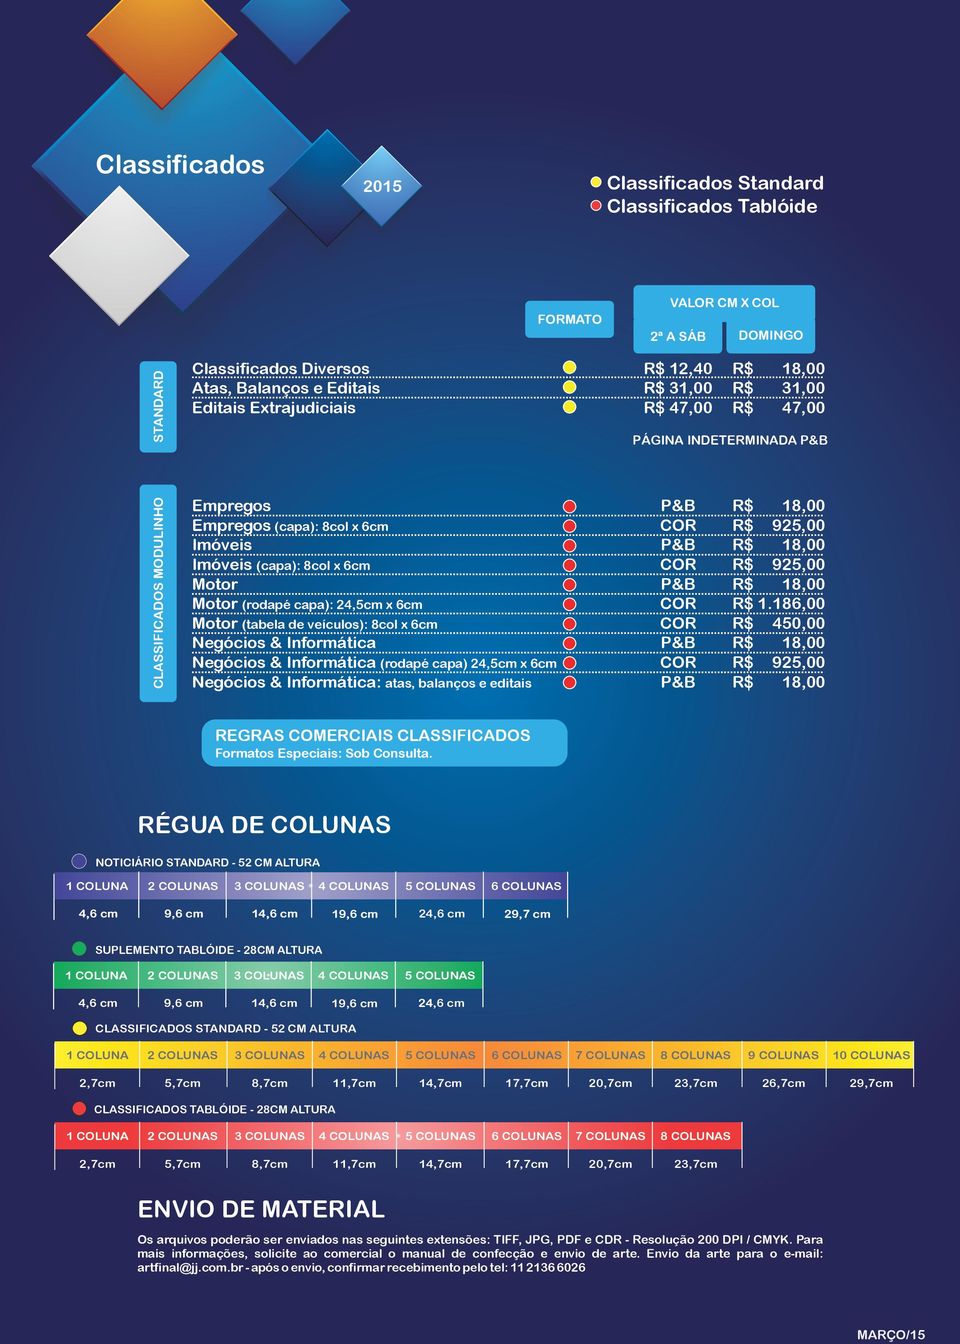 Negócios & Informática Negócios & Informática (rodapé capa) 24,5cm x 6cm Negócios & Informática: atas, balanços e editais 925,00 925,00 1.